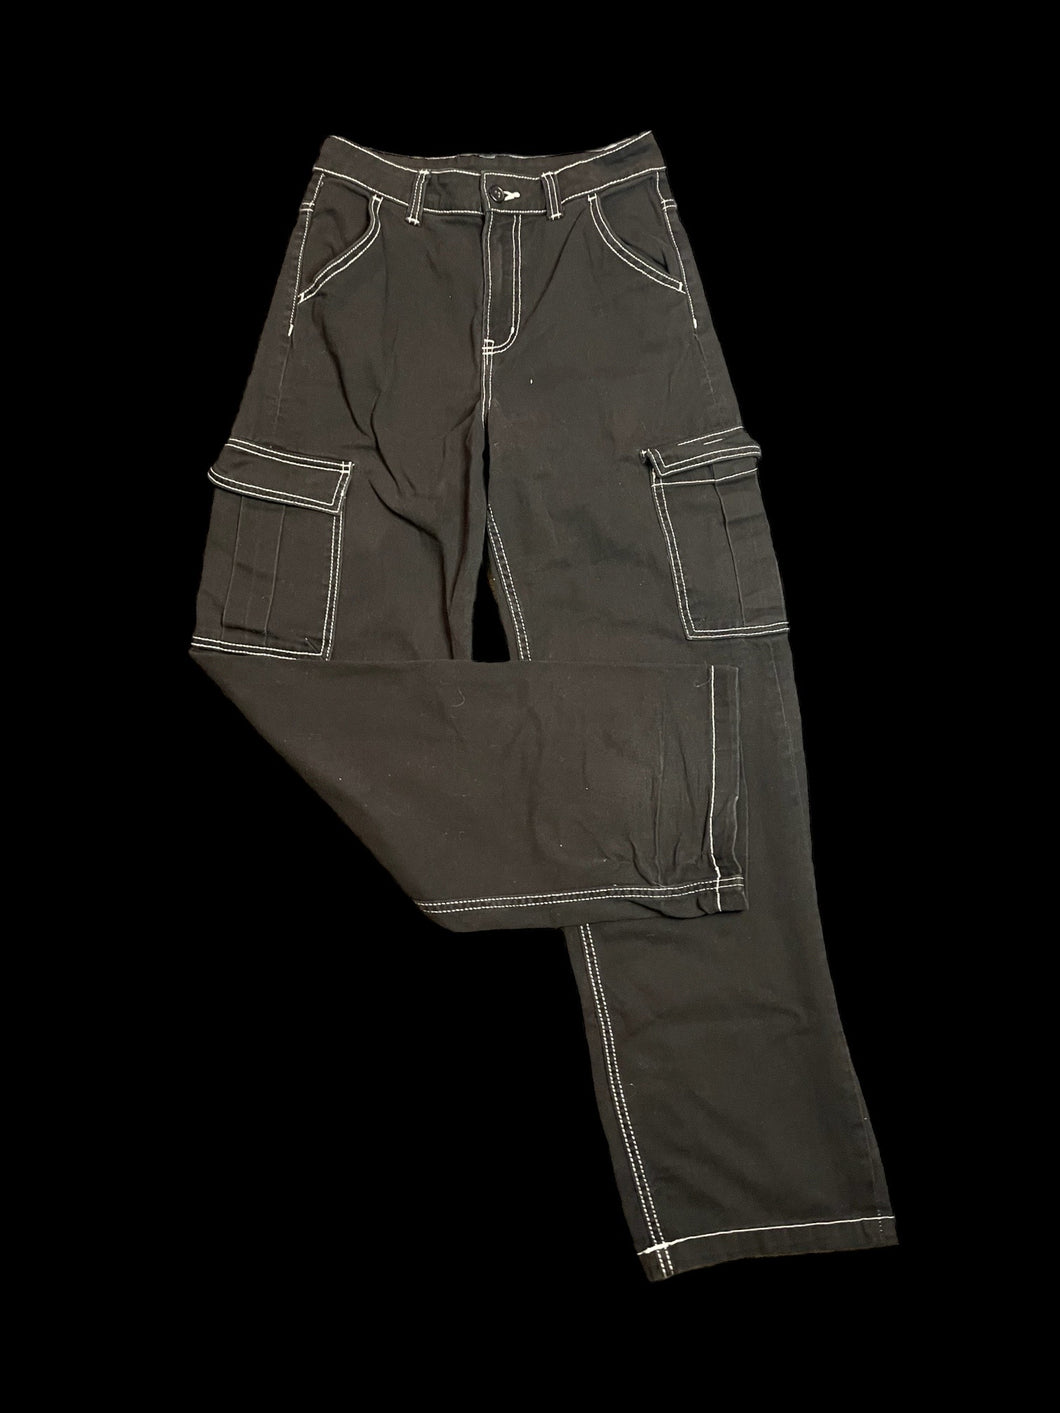 S Black denim high waist wide leg pants w/ white stitching, pockets, belt loops, & button/zipper closure